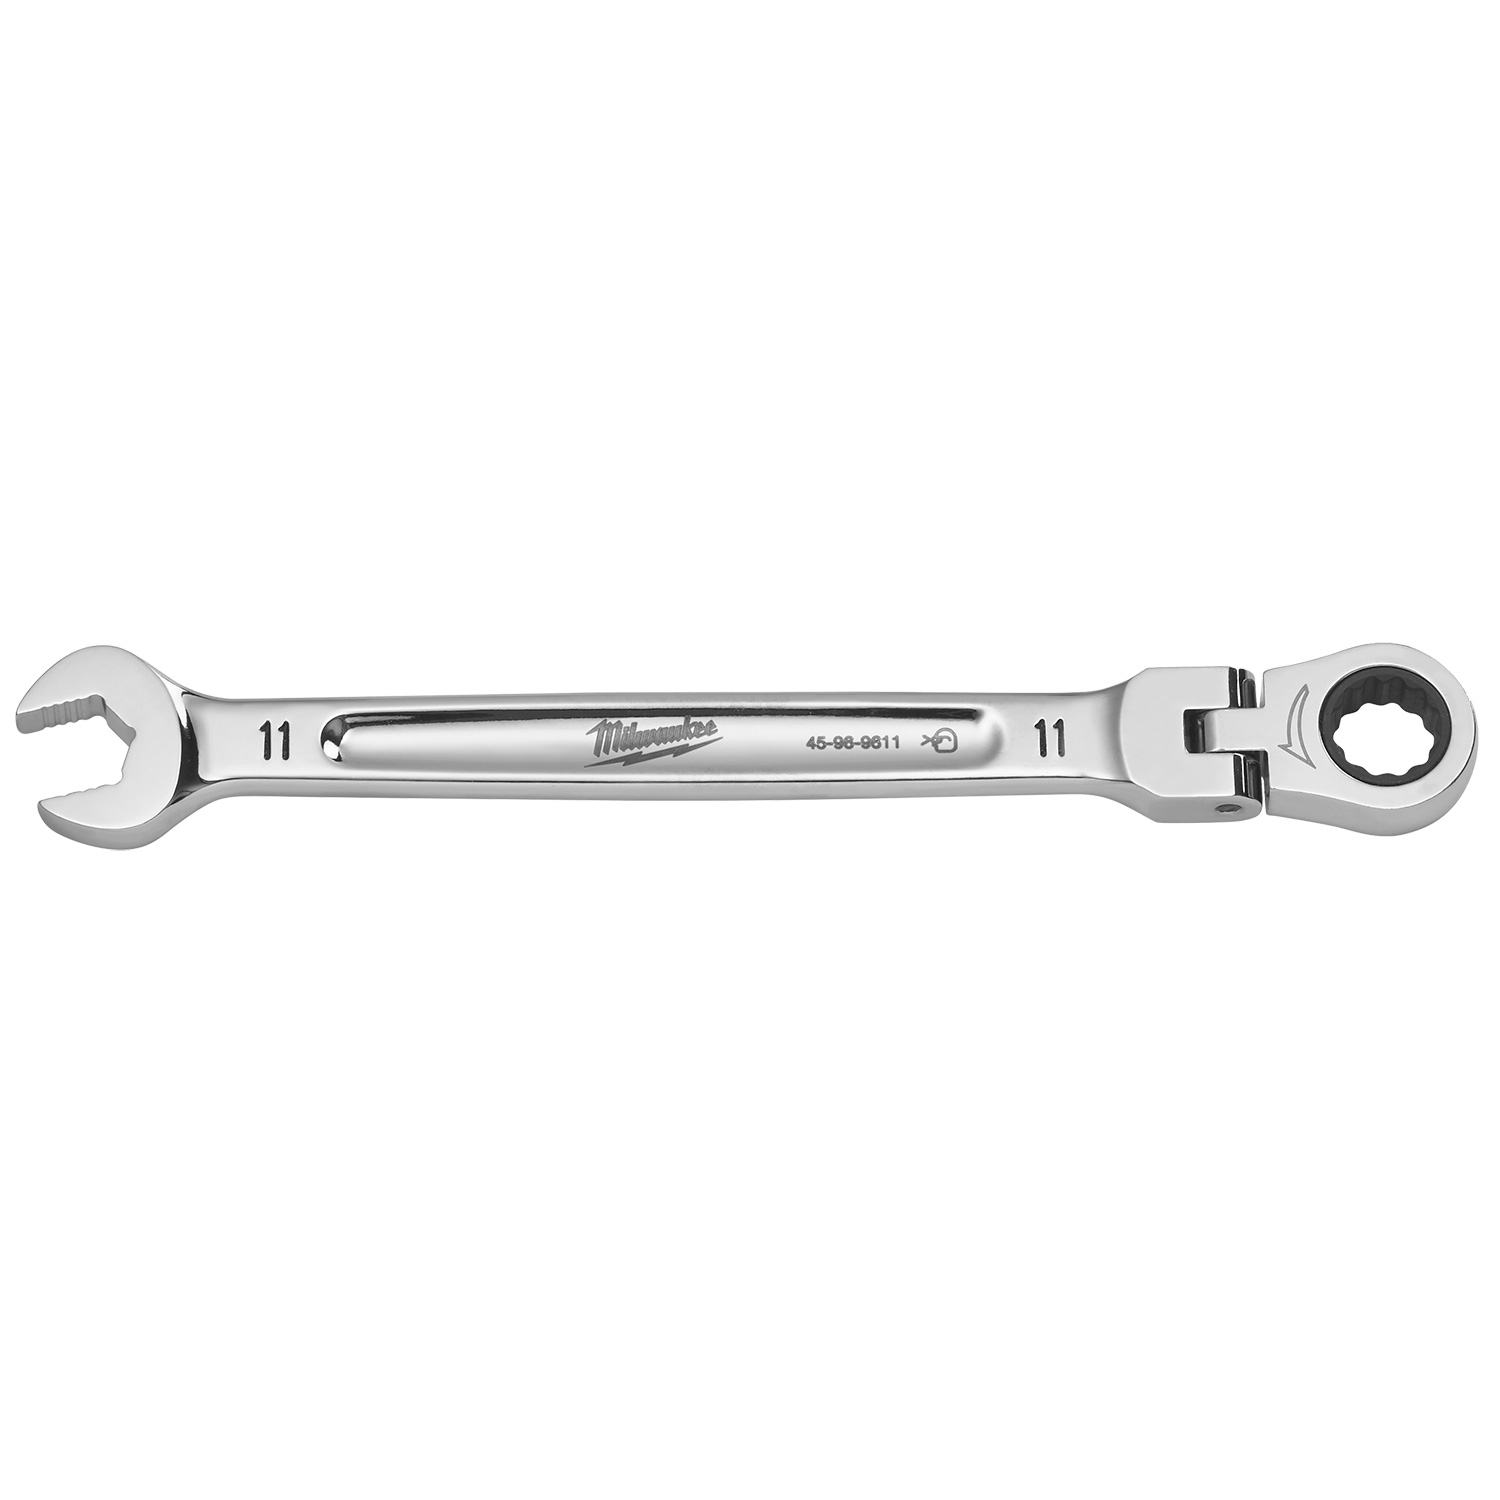 Milwaukee 11mm Flex Head Combination Wrench 45969611